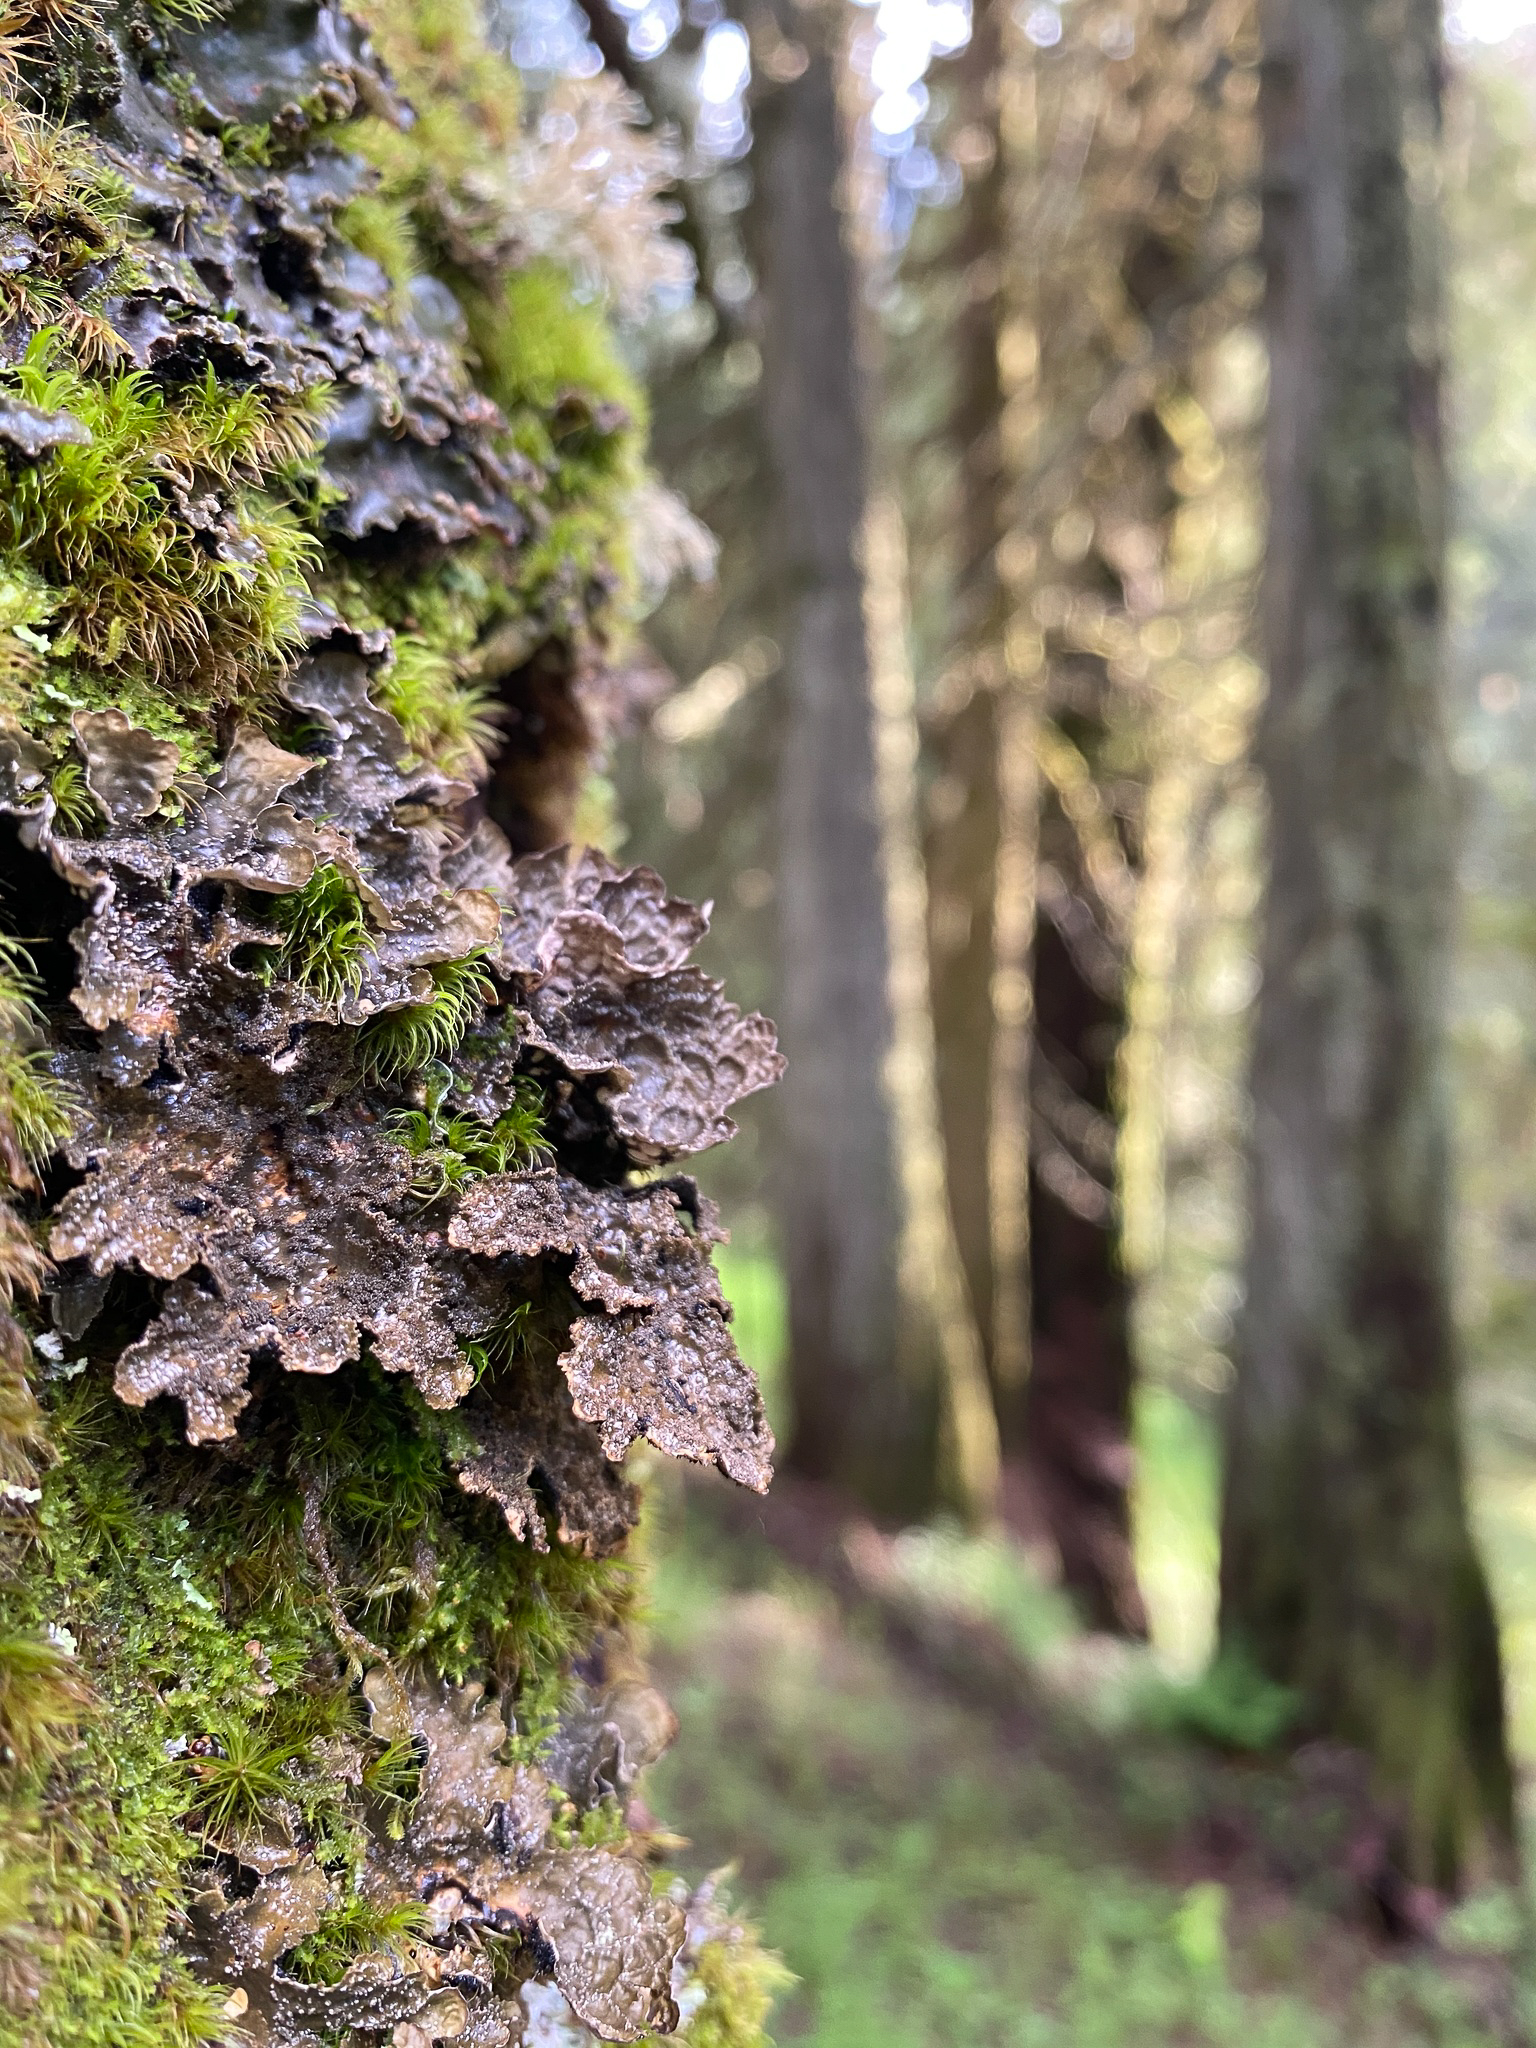 Smoker's lung lichen in the rare inland temperate rainforest